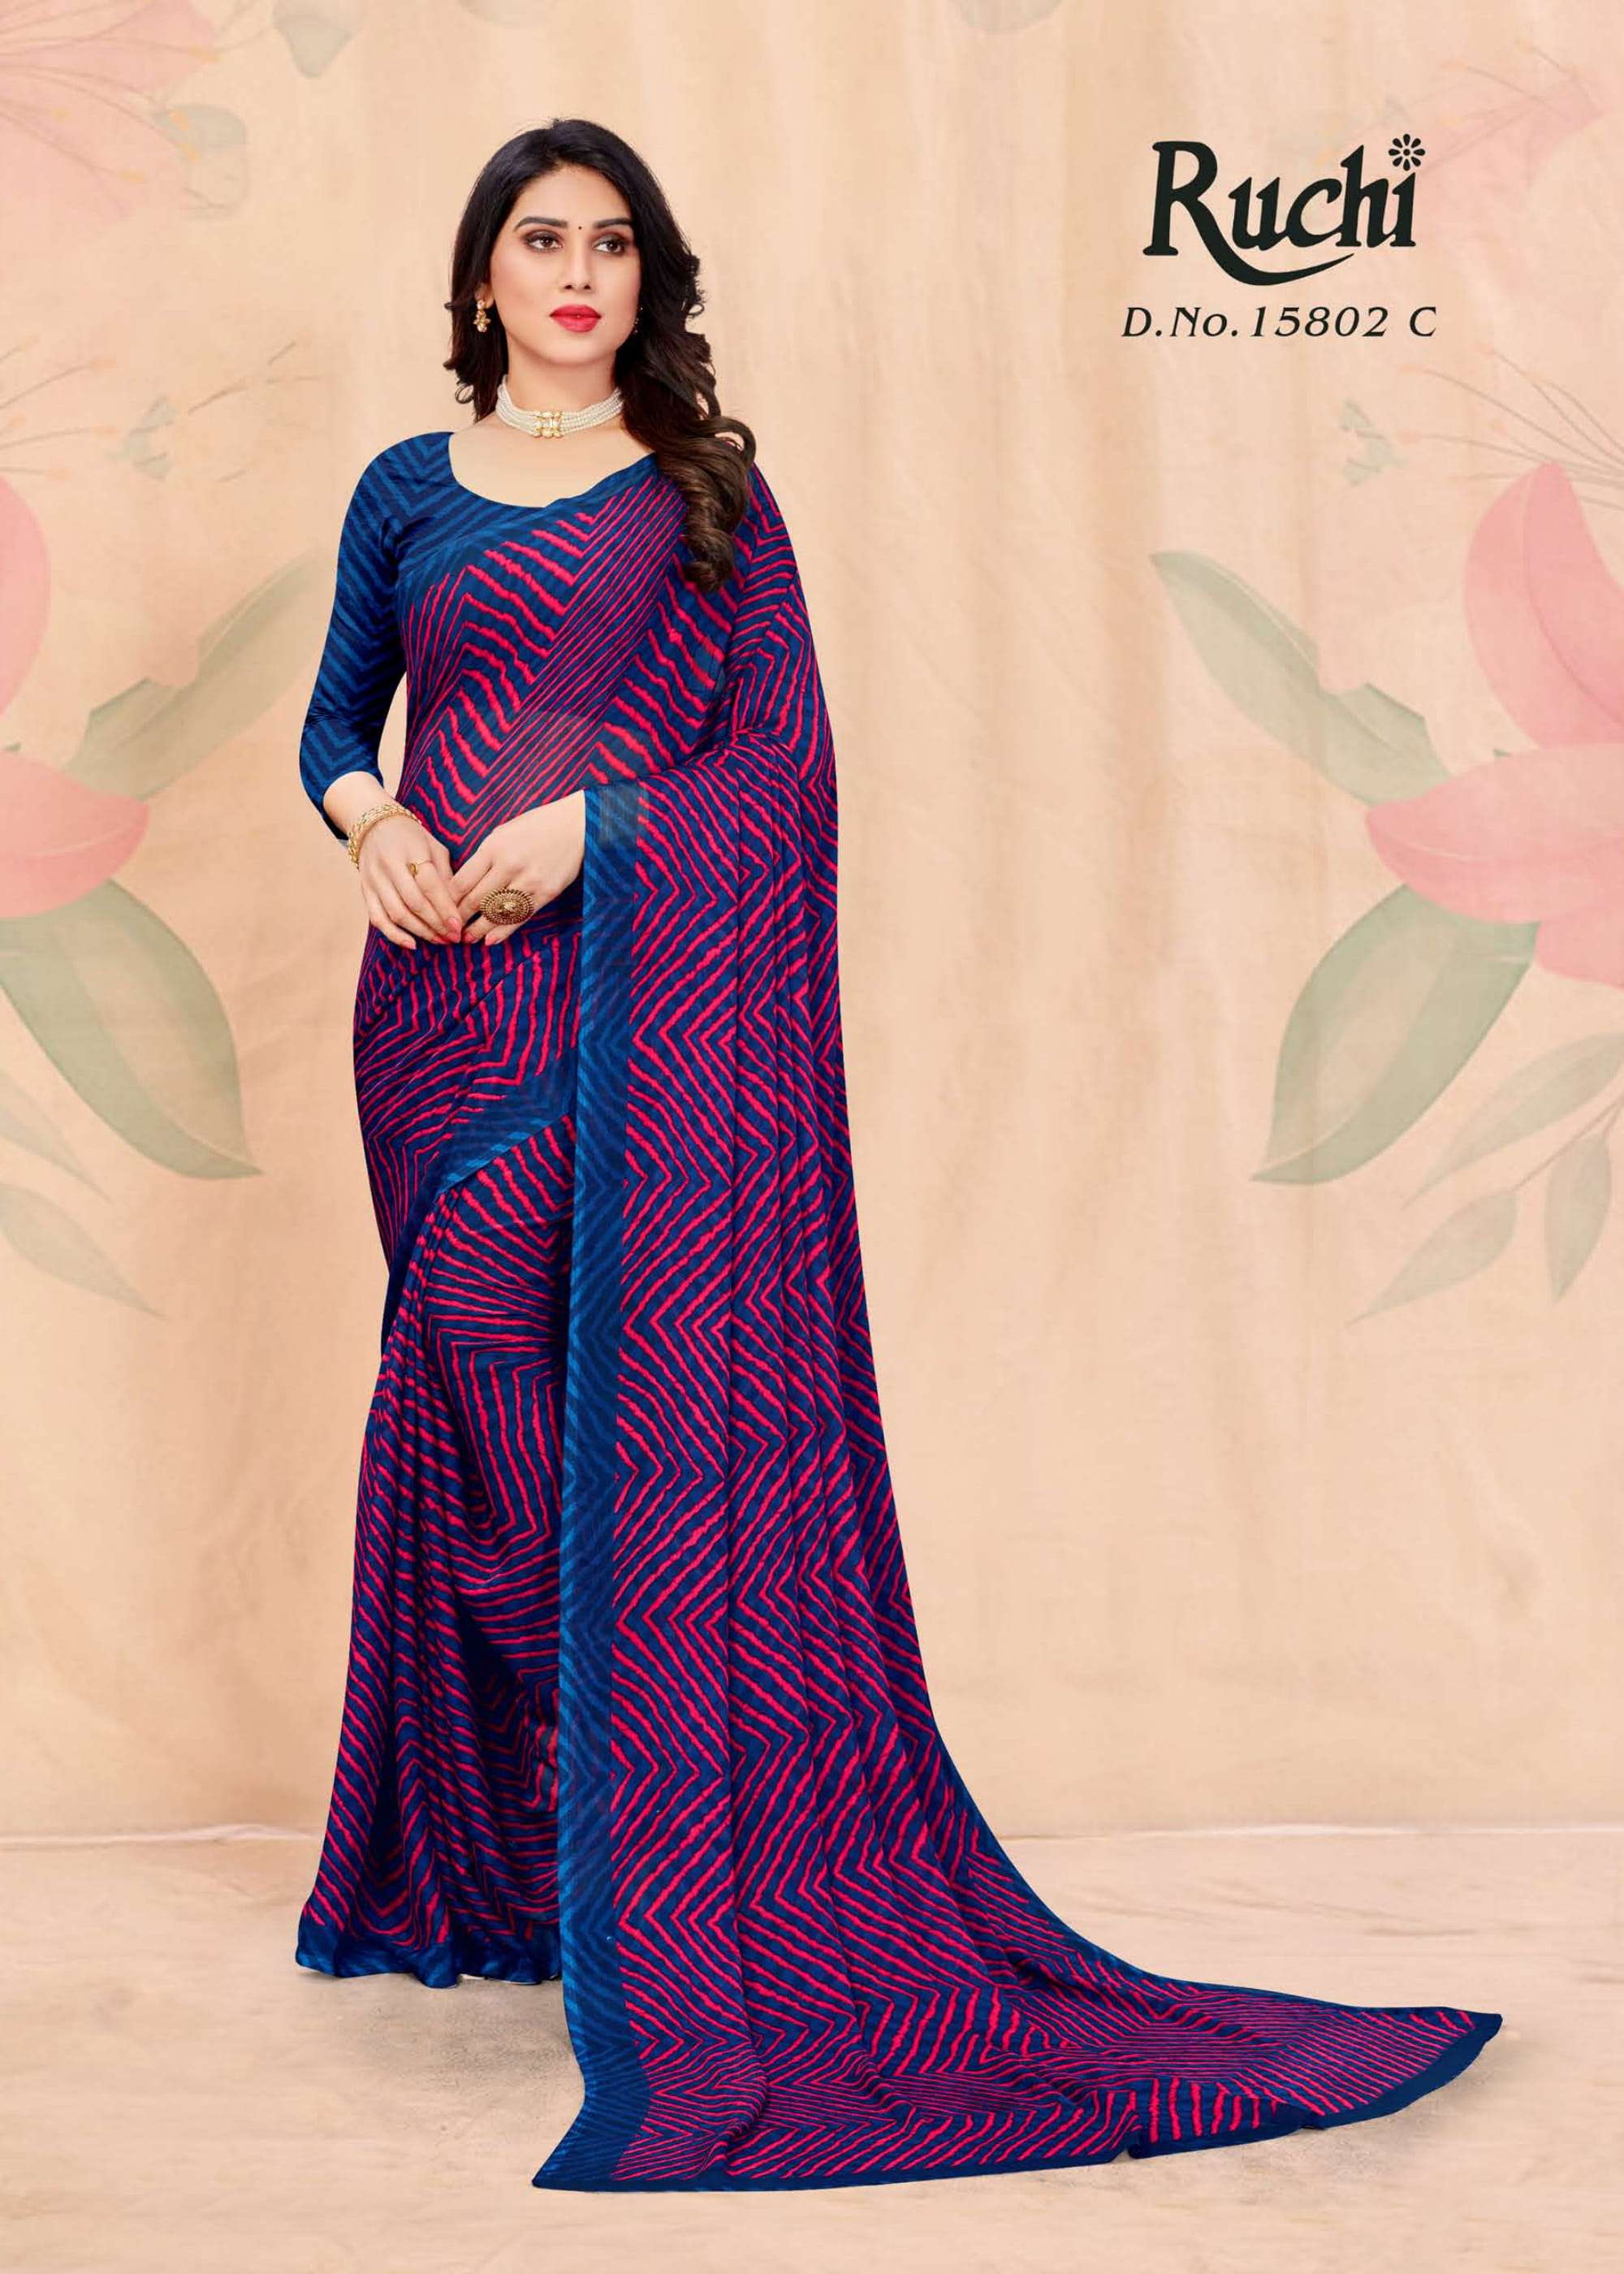 ruchi star chiffon 15802 lehriya design printed sarees 